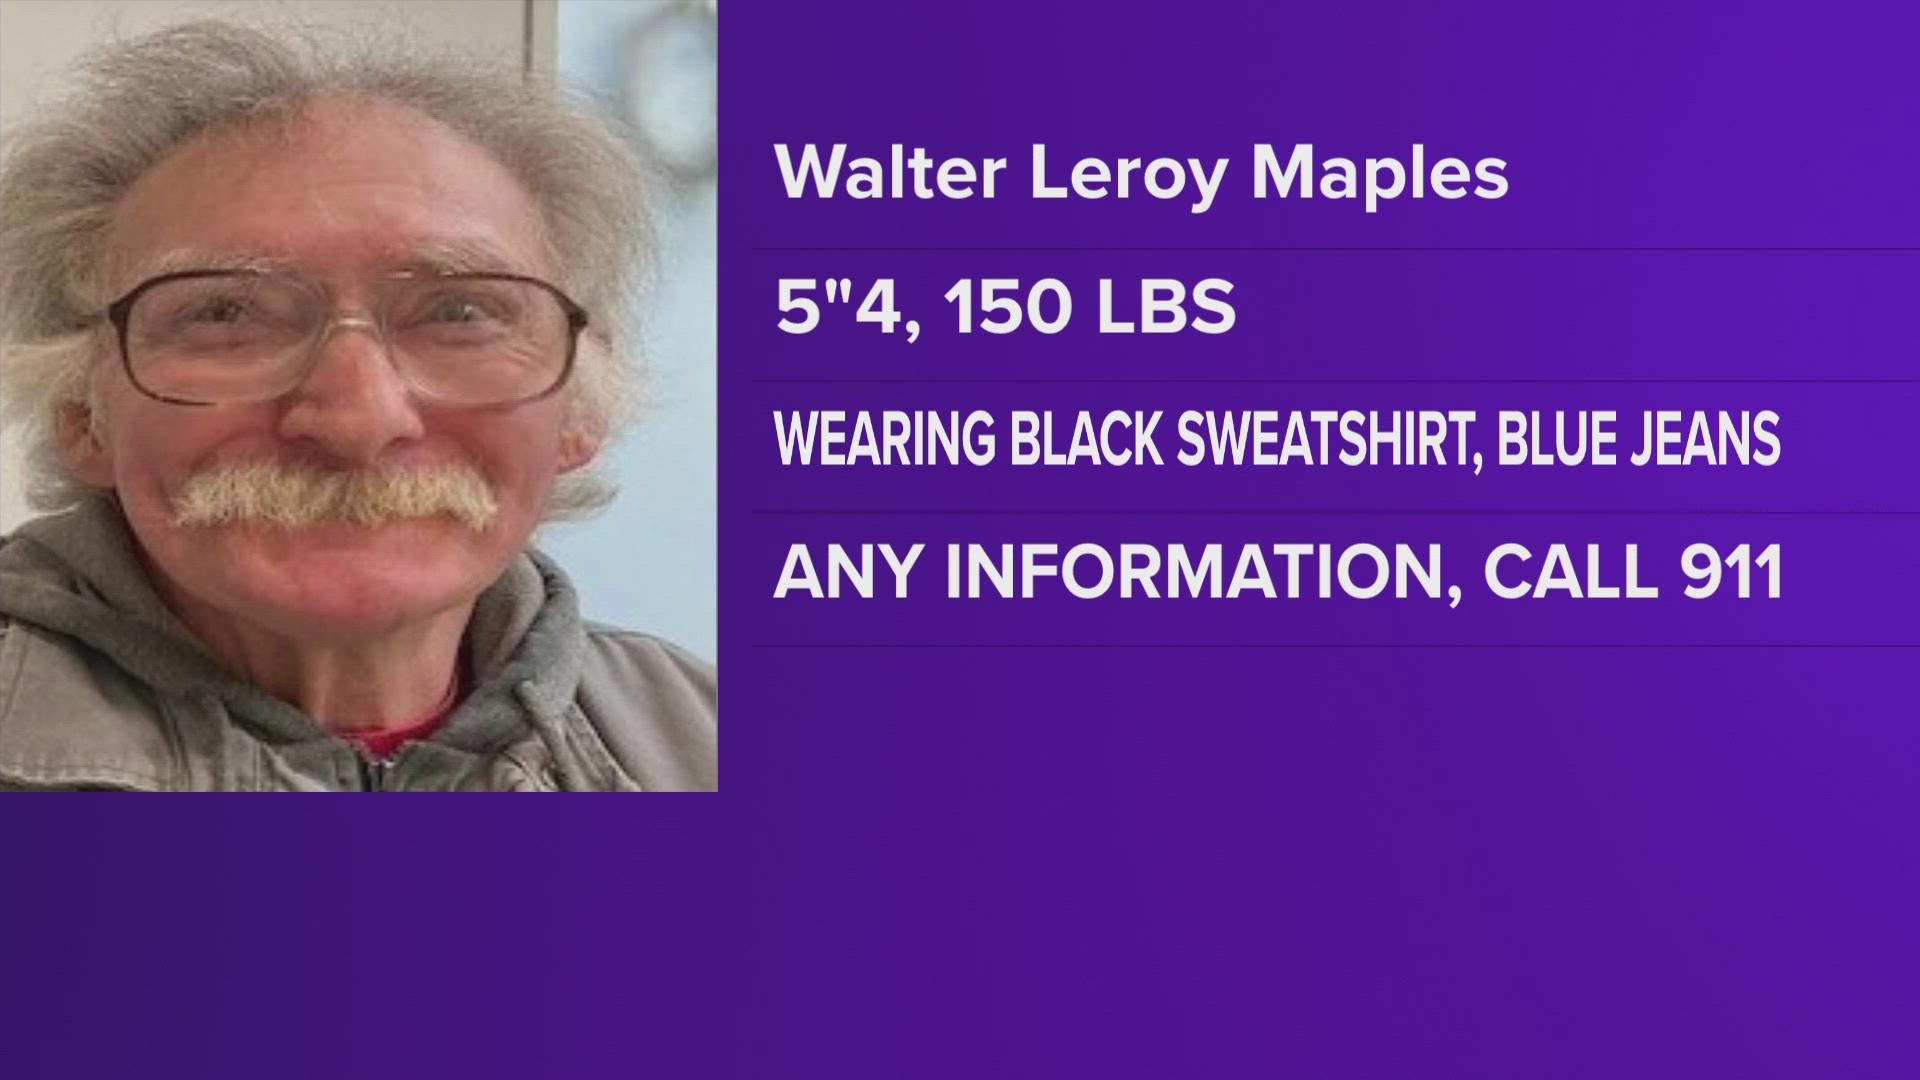 Walter Leroy Maples was last seen wearing a black sweatshirt and blue jeans.